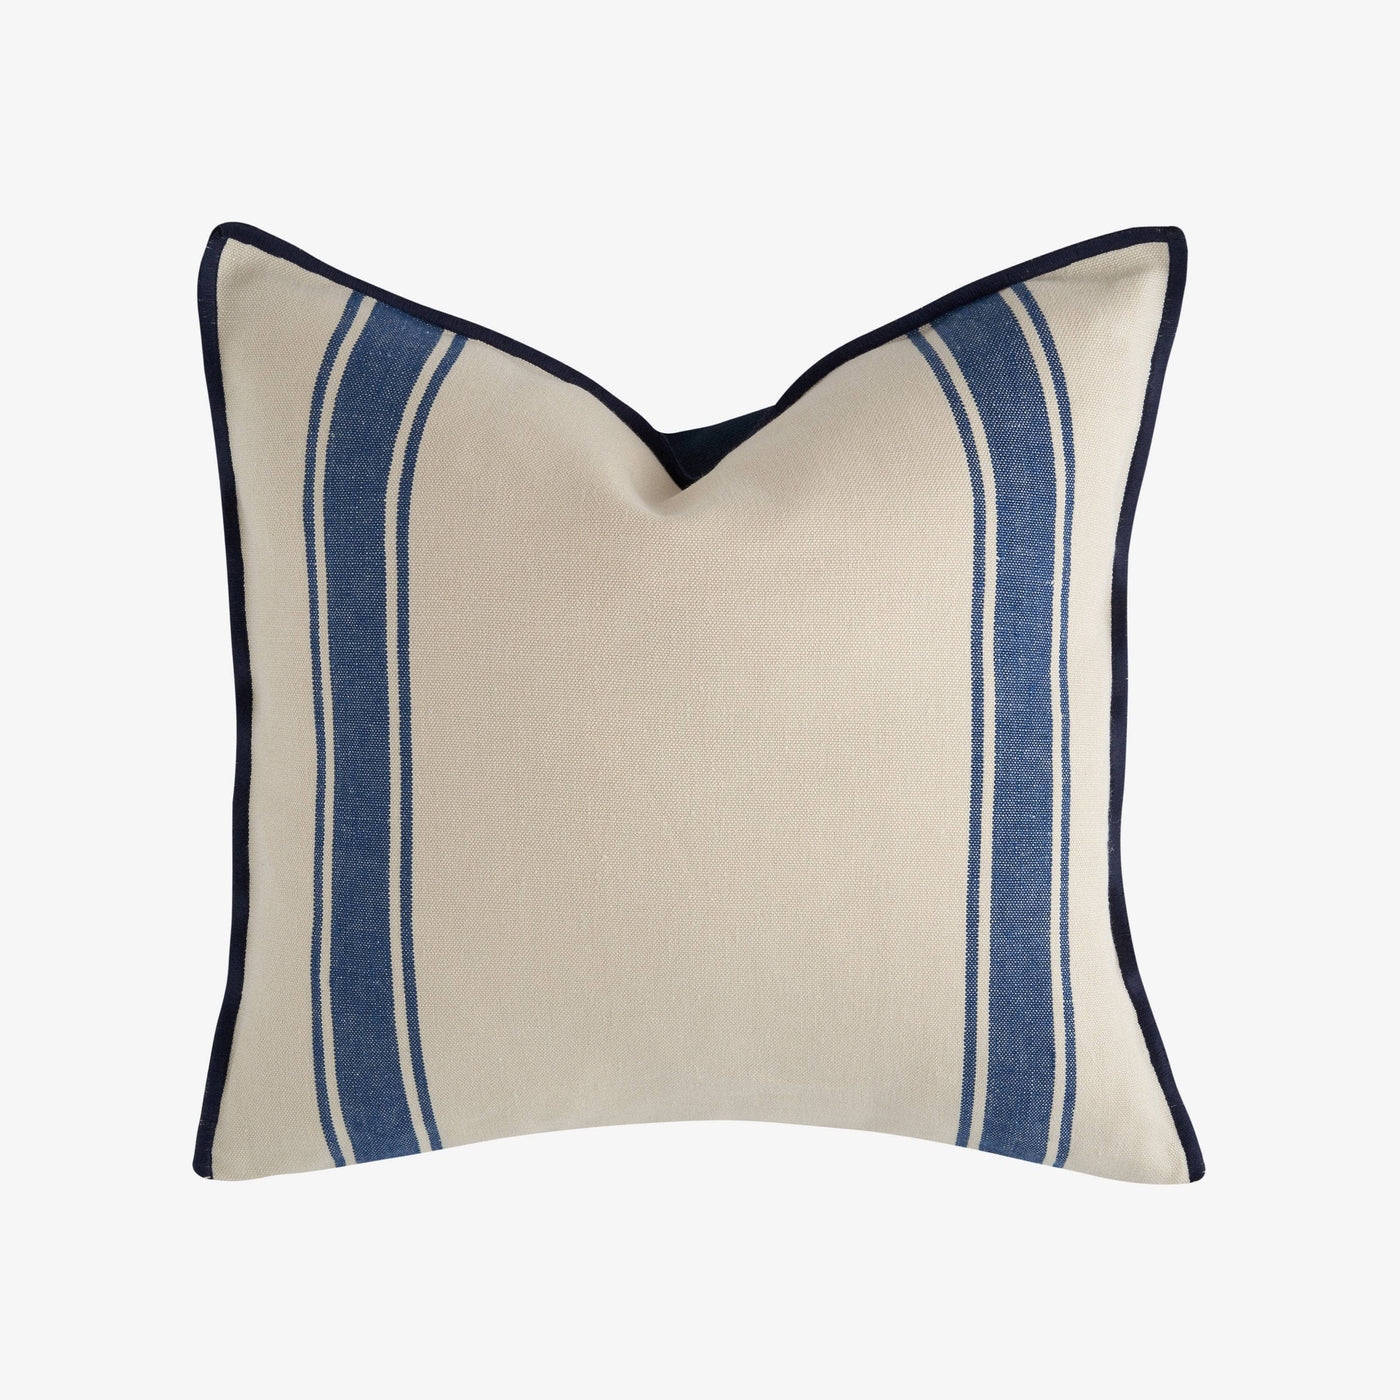 Lido Striped Linen Cushion Cover, Natural - Blue, 45x45 cm Cushion Covers sazy.com